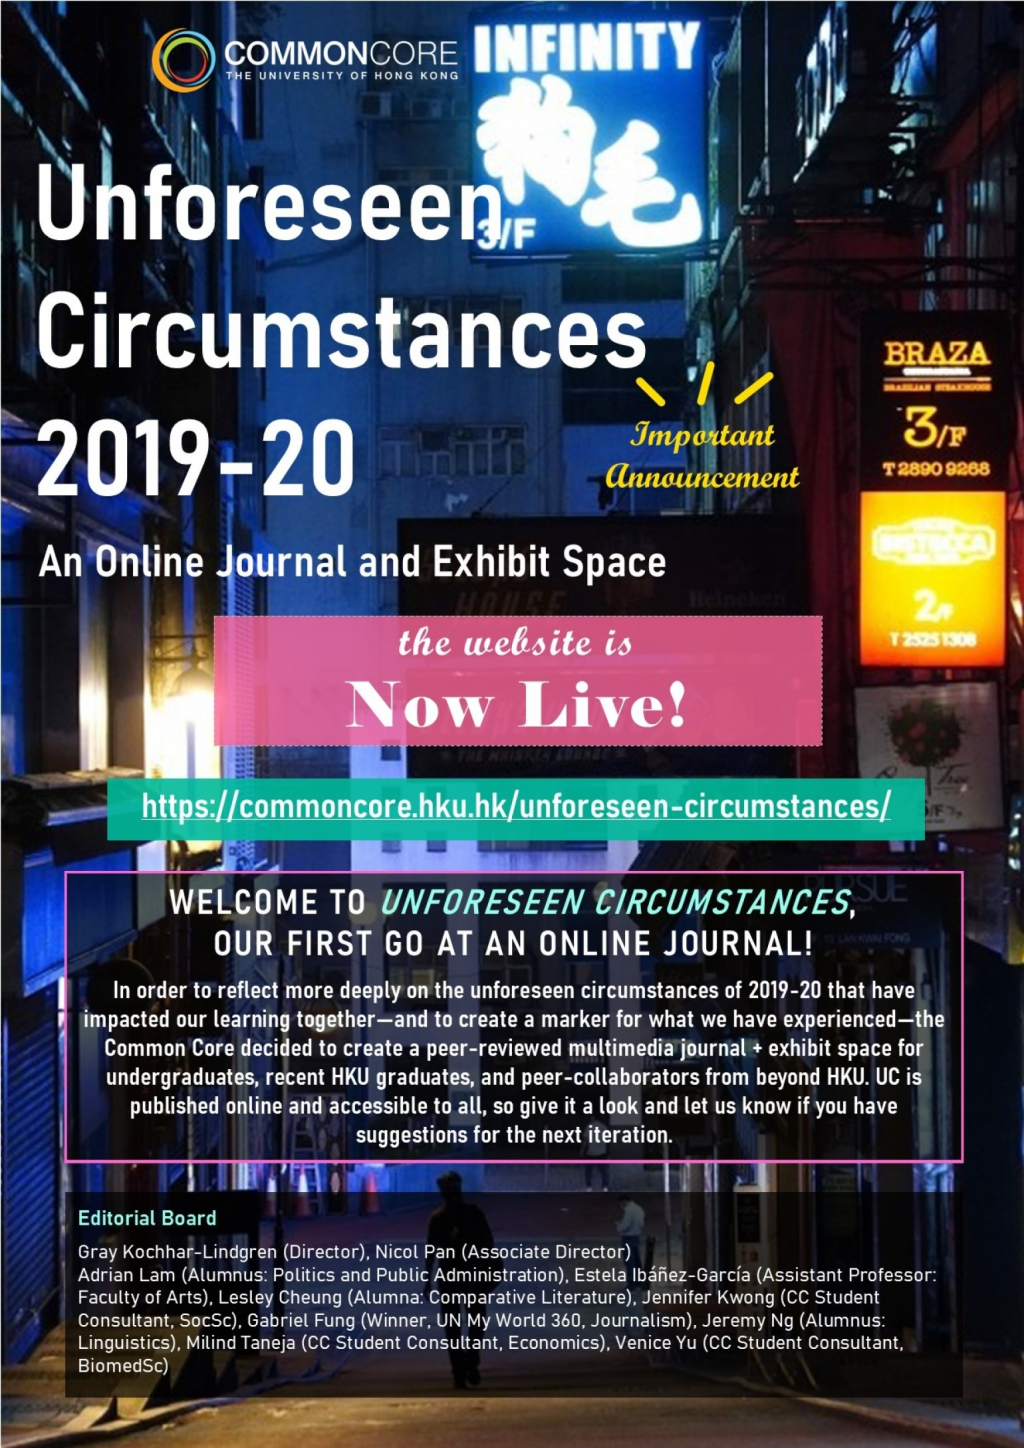 Unforeseen Circumstances - An Online Journal and Exhibit Space